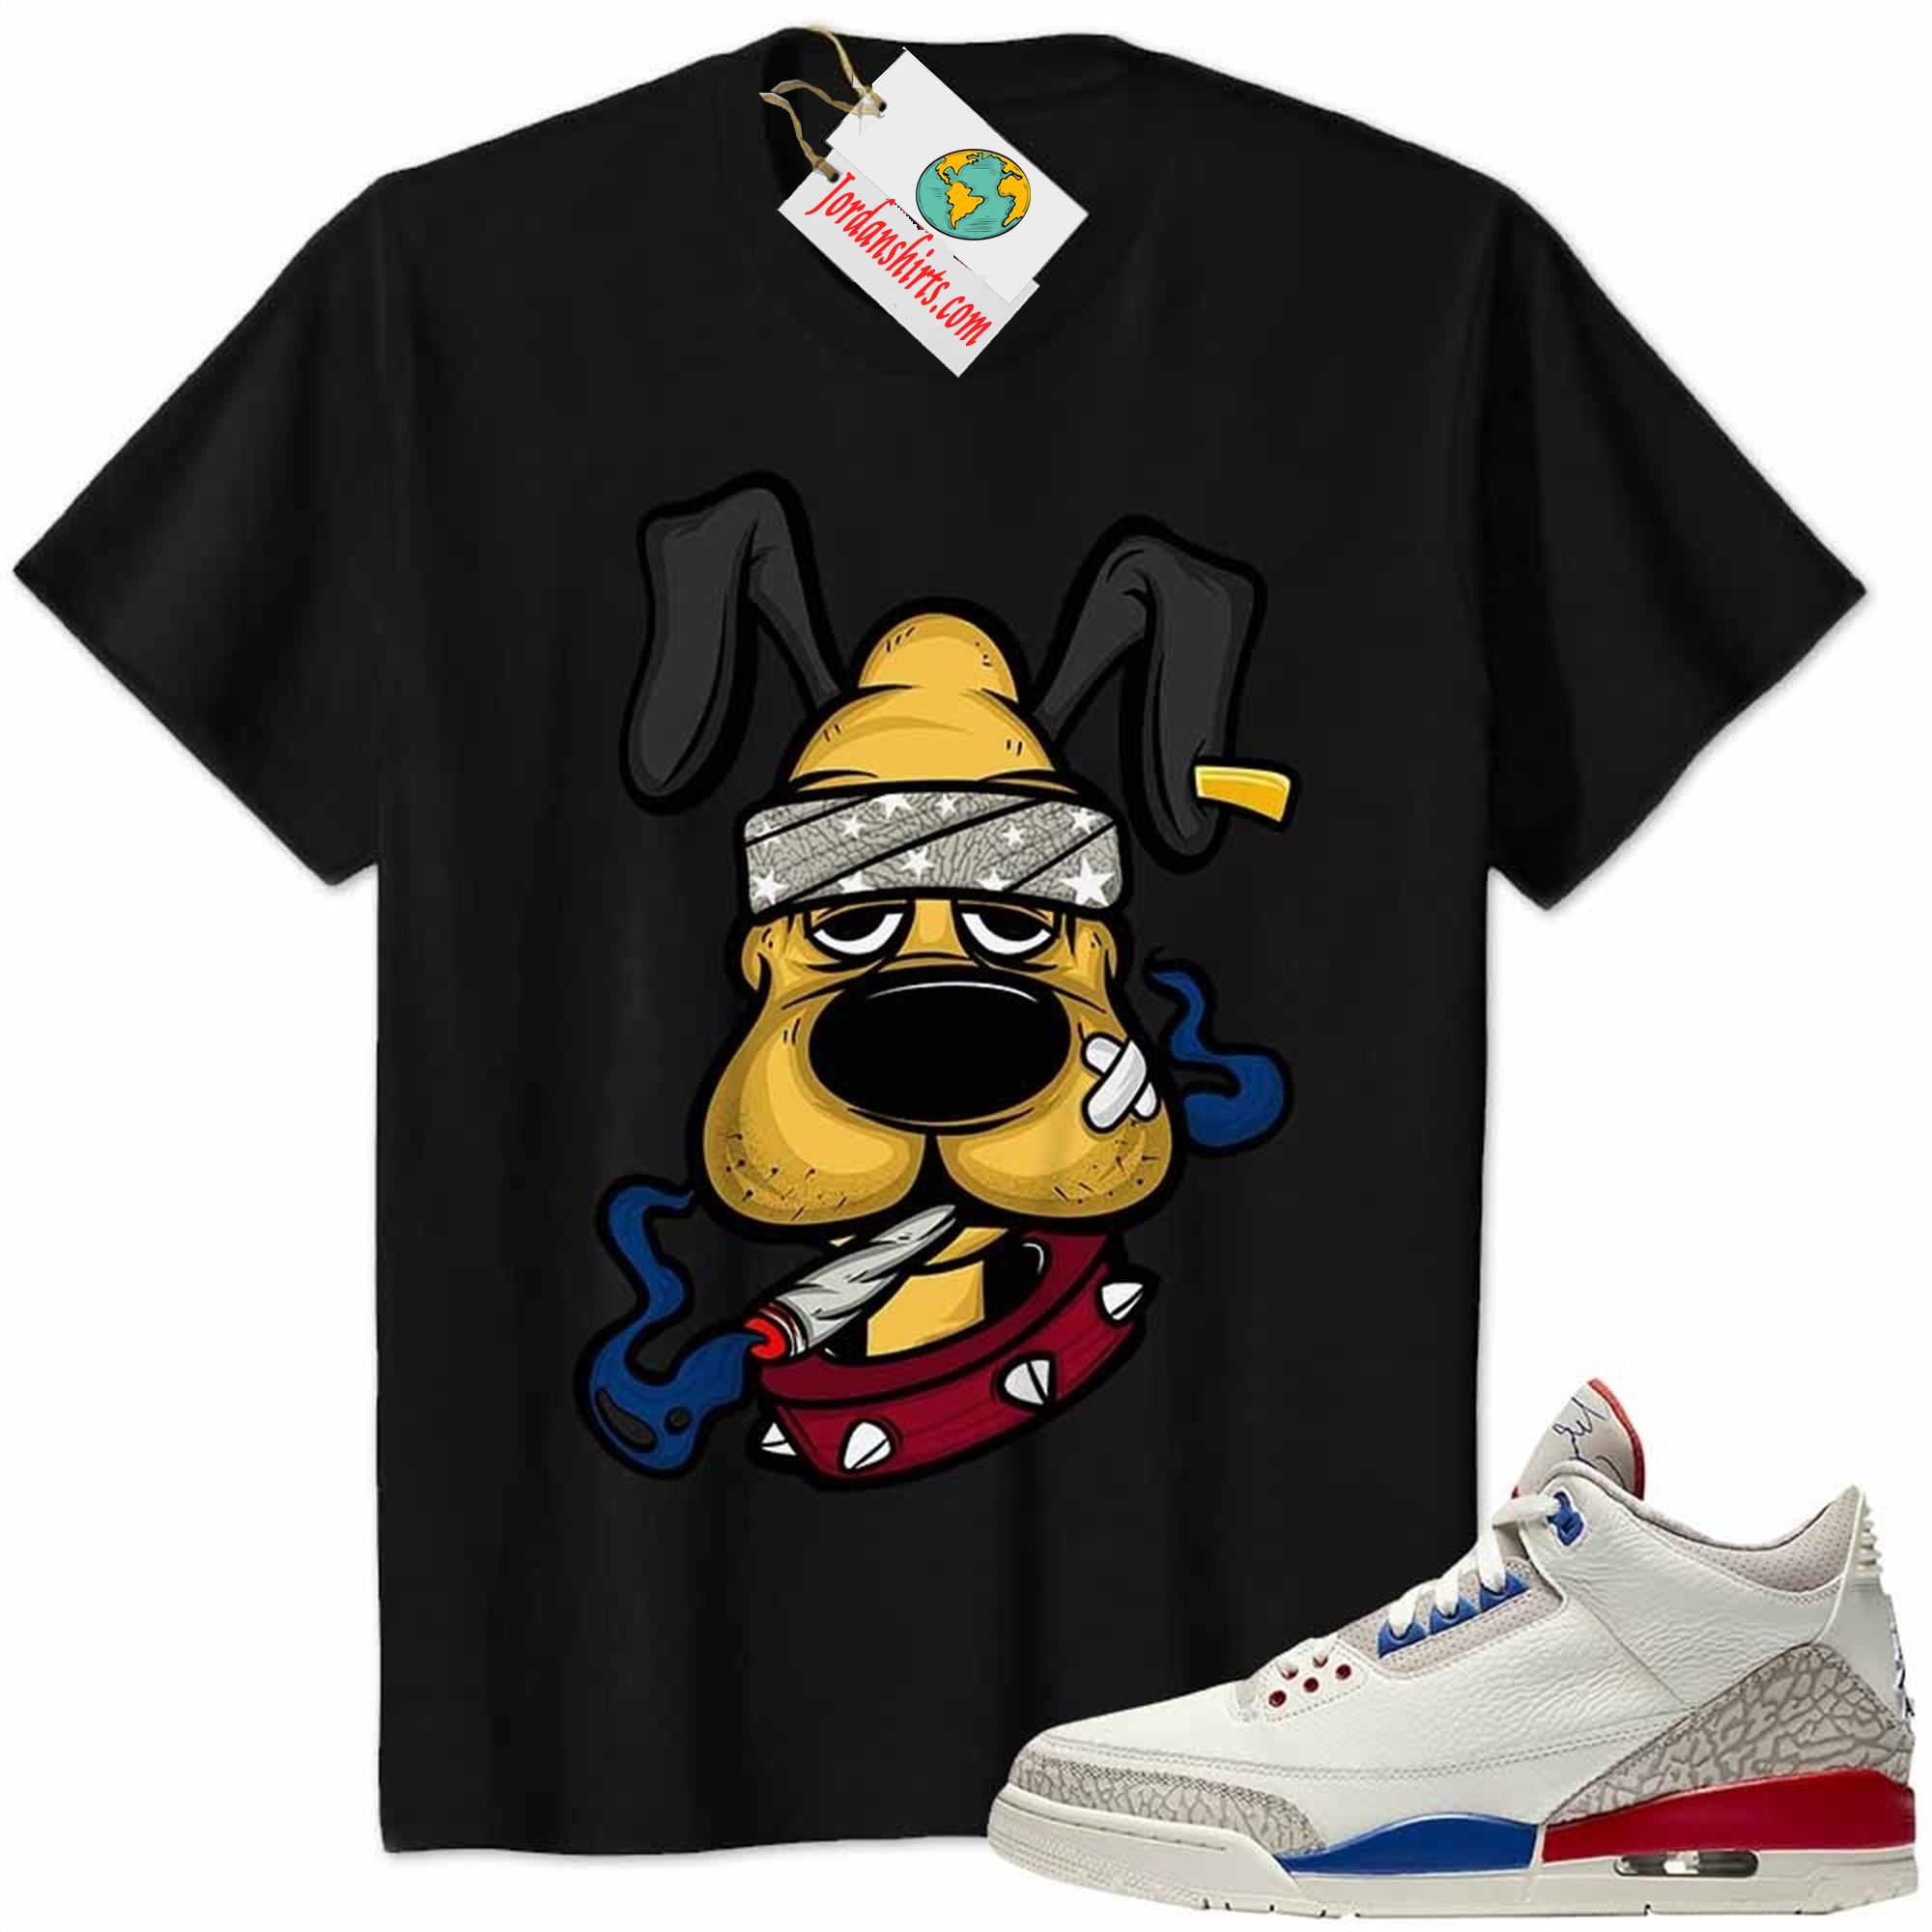 Jordan 3 Shirt, Gangster Pluto Smoke Weed Black Air Jordan 3 International Flight Charity Game 3s Full Size Up To 5xl